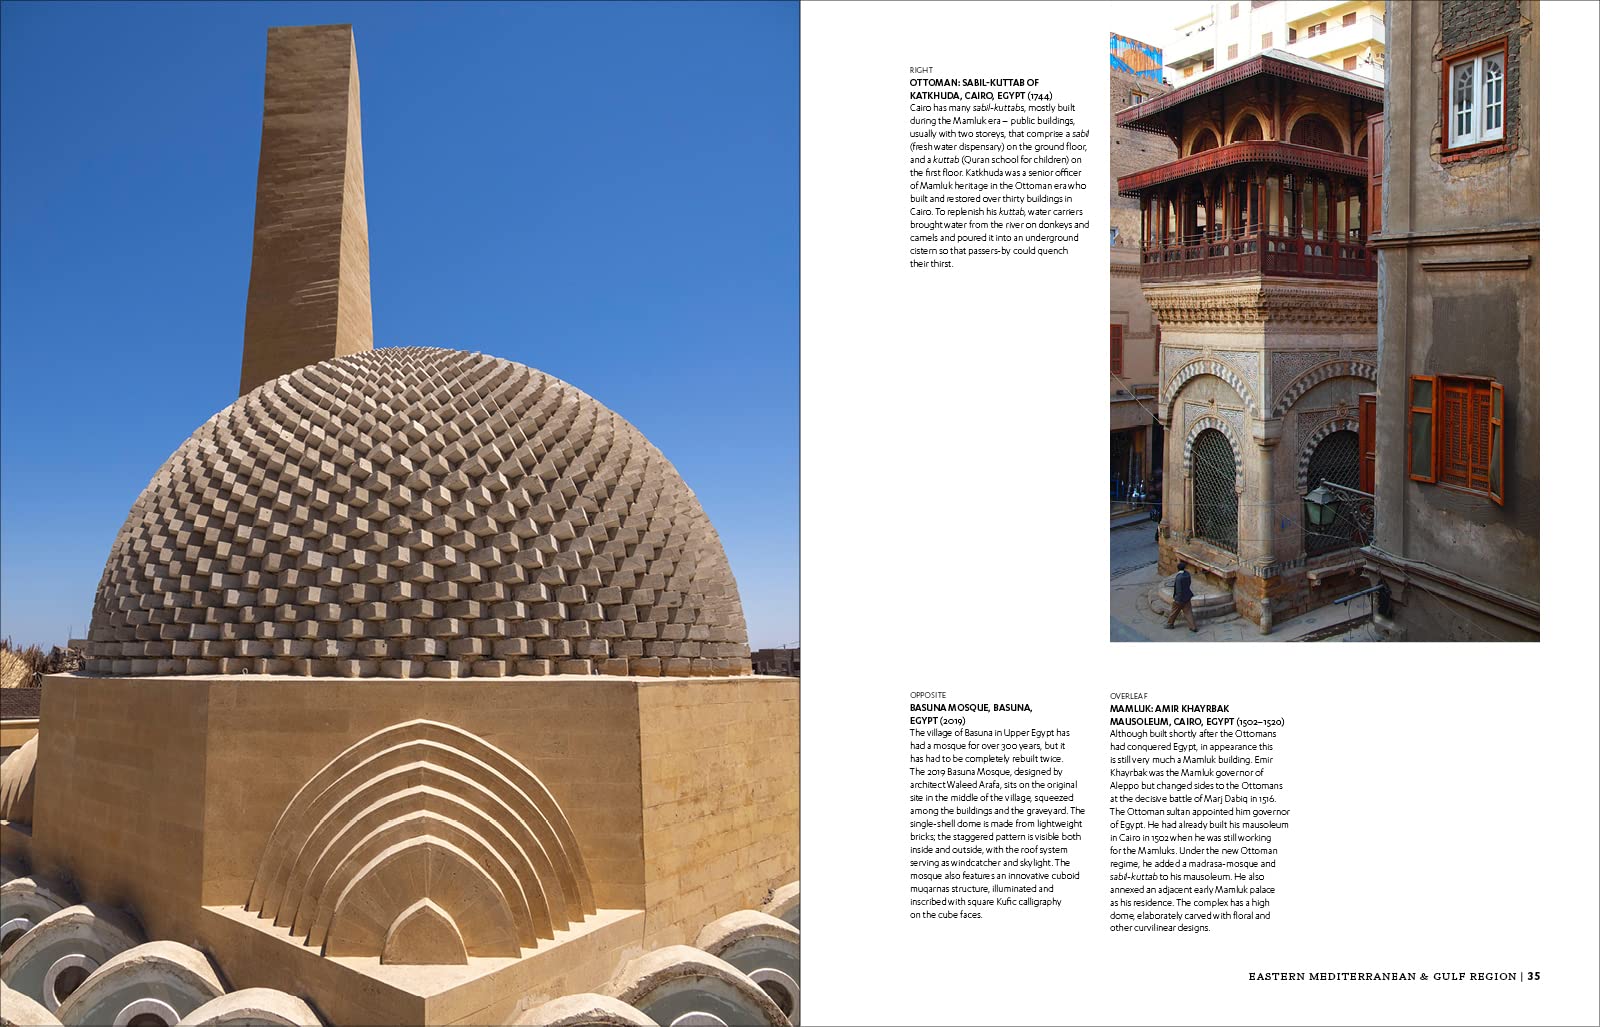 Islamic Architecture